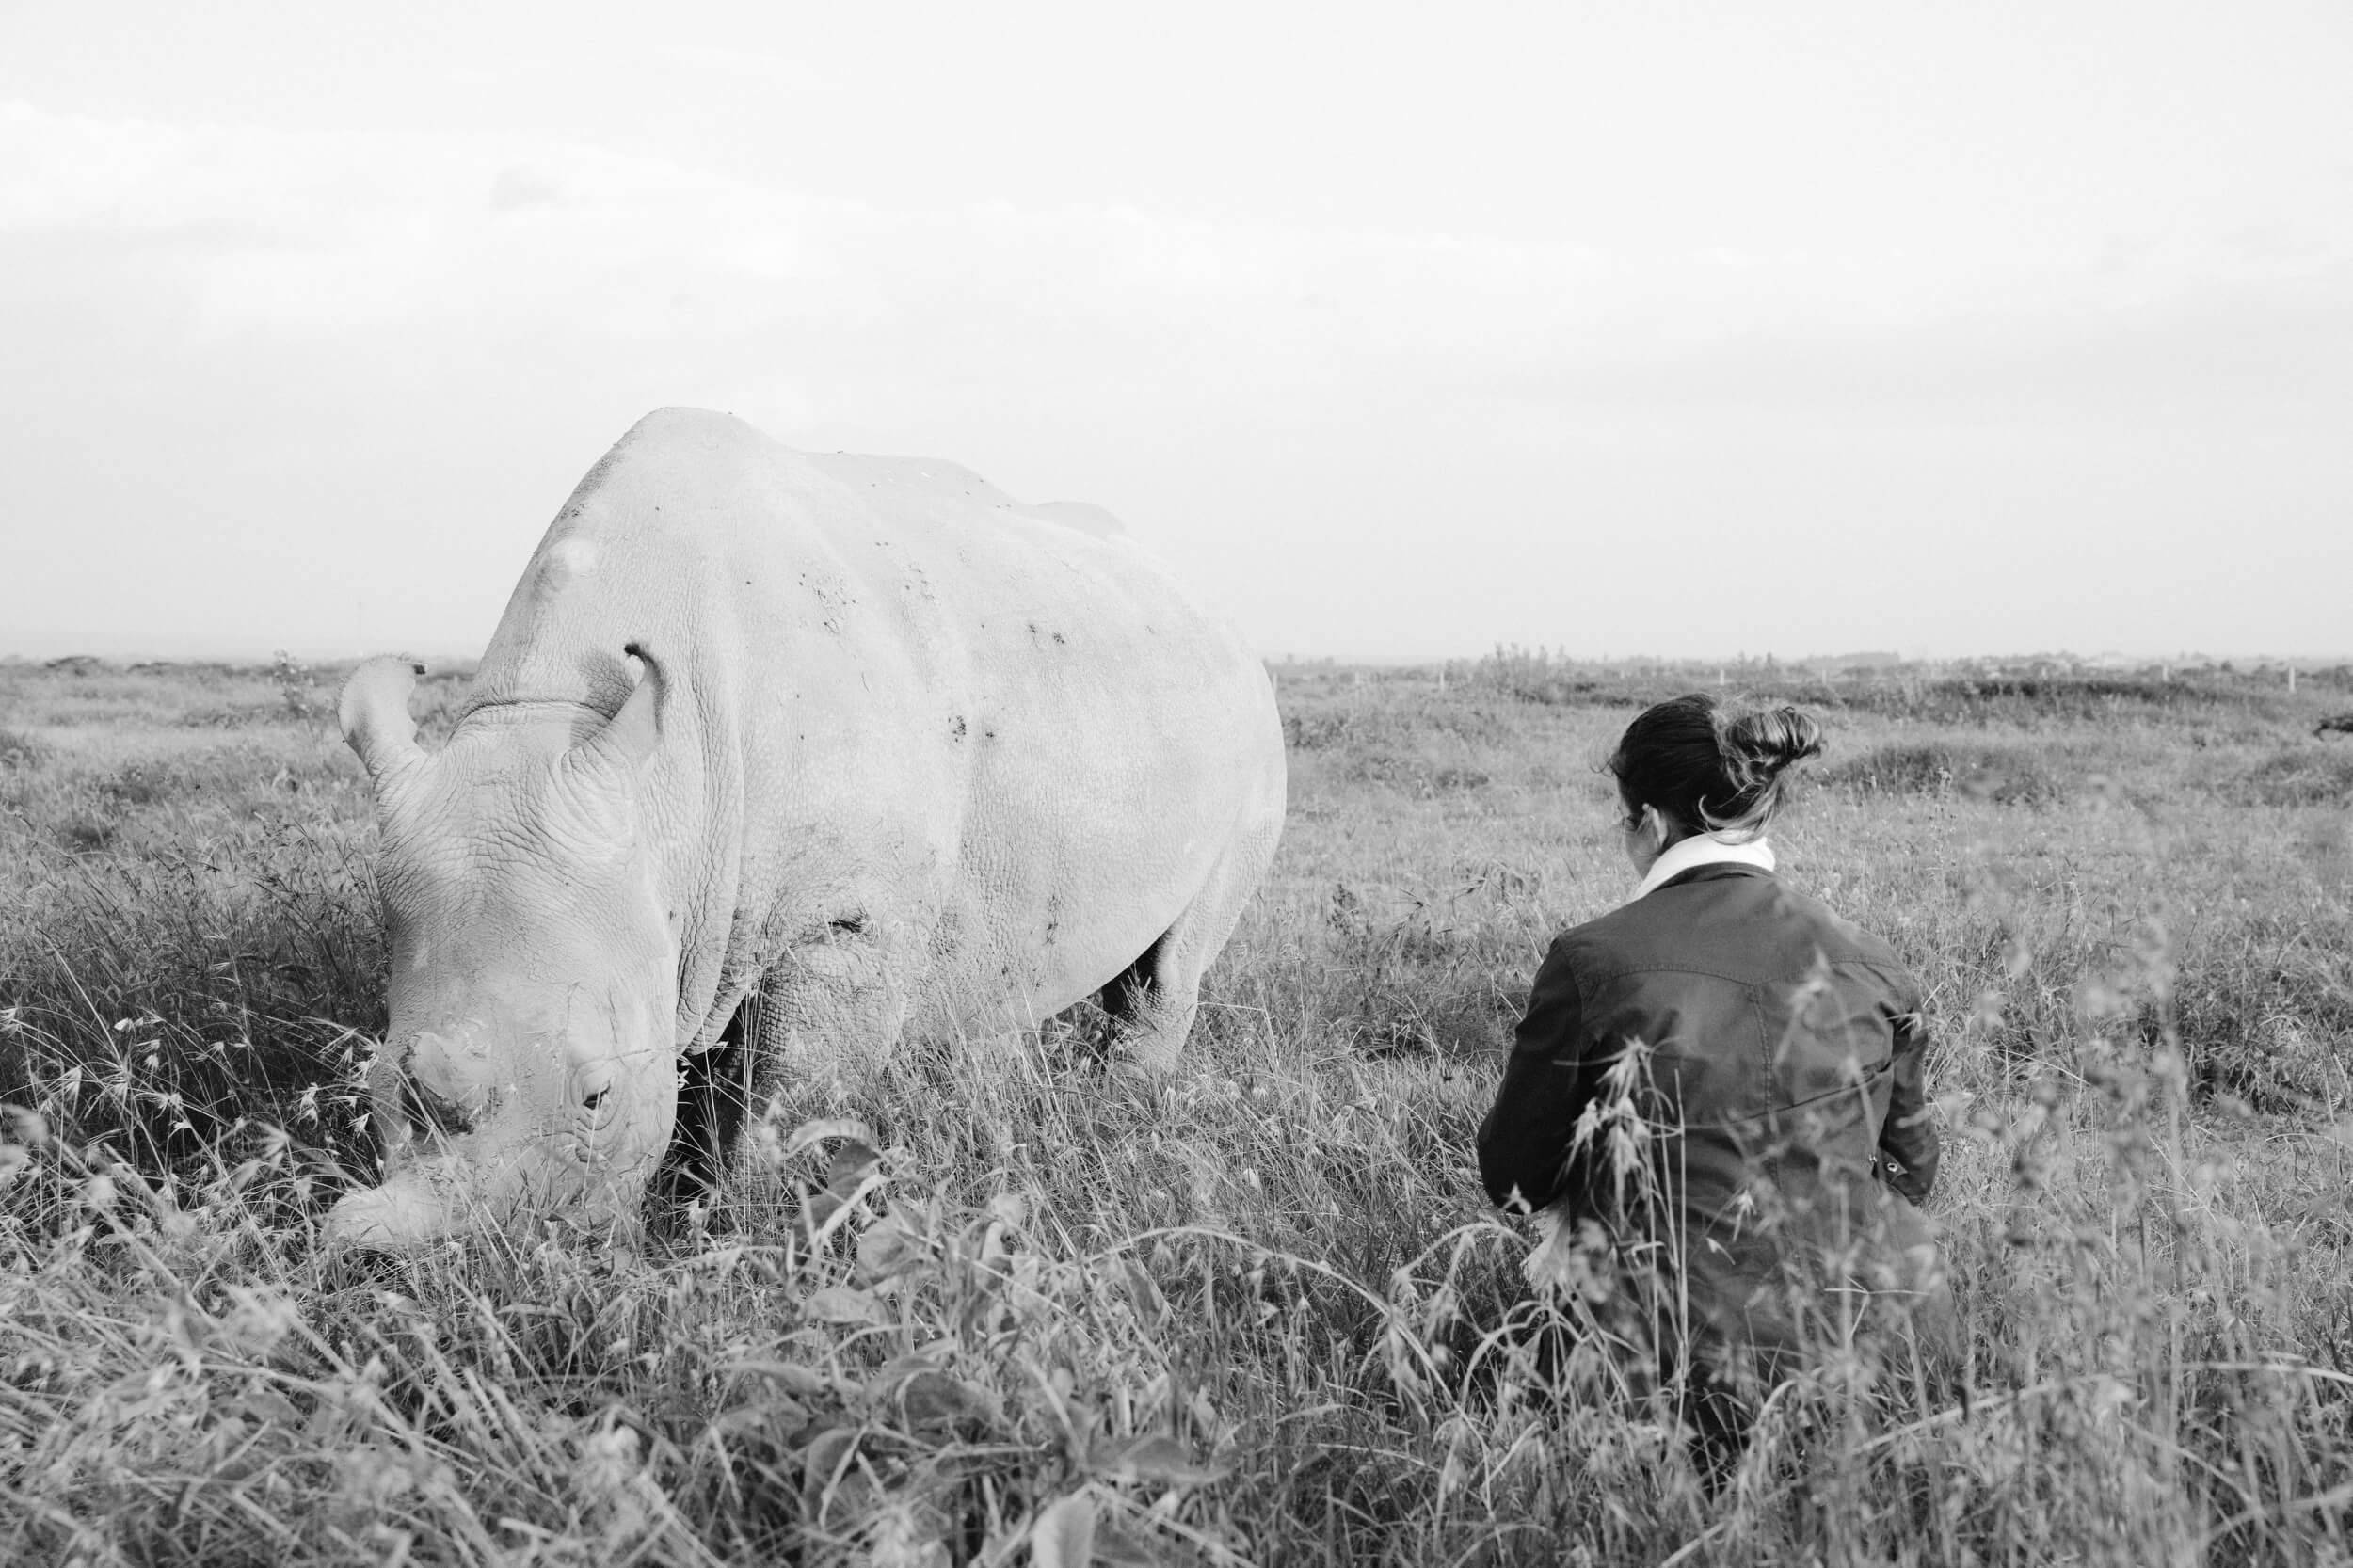 KT Merry photographs rhinos at Ol Pejeta Conservancy